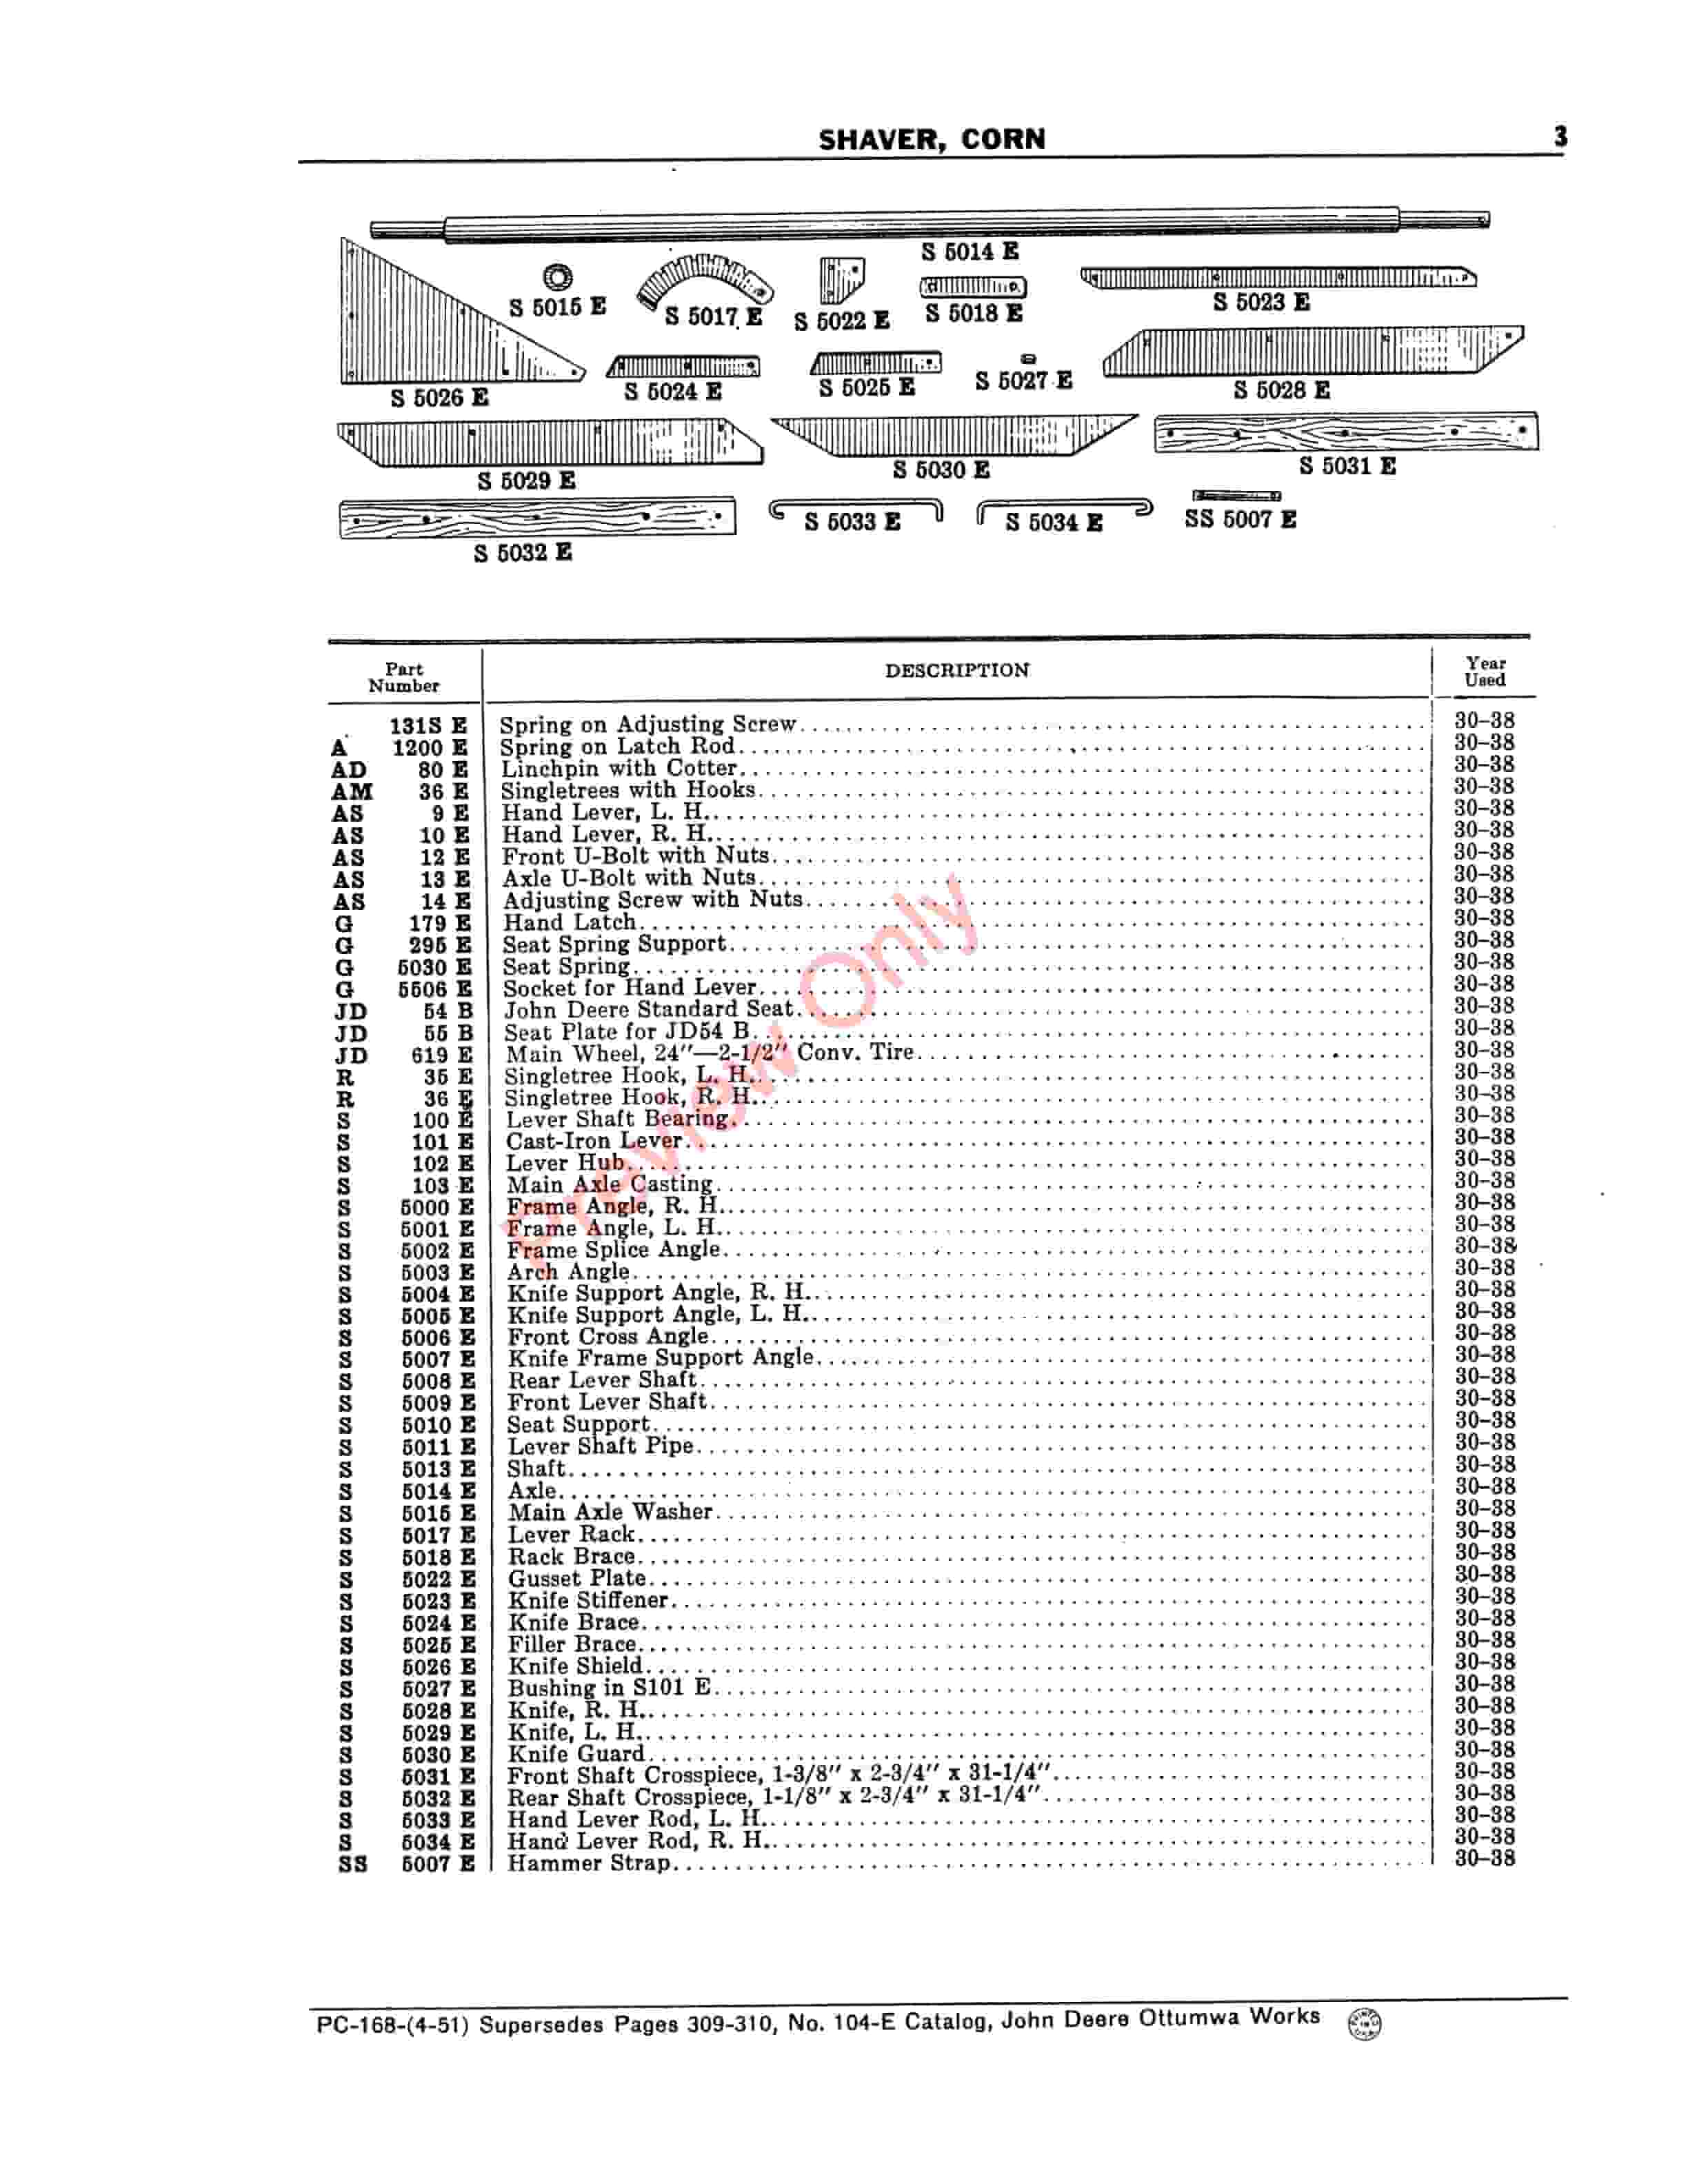 John Deere Corn Shaver Parts Catalog PC168 01APR51-5